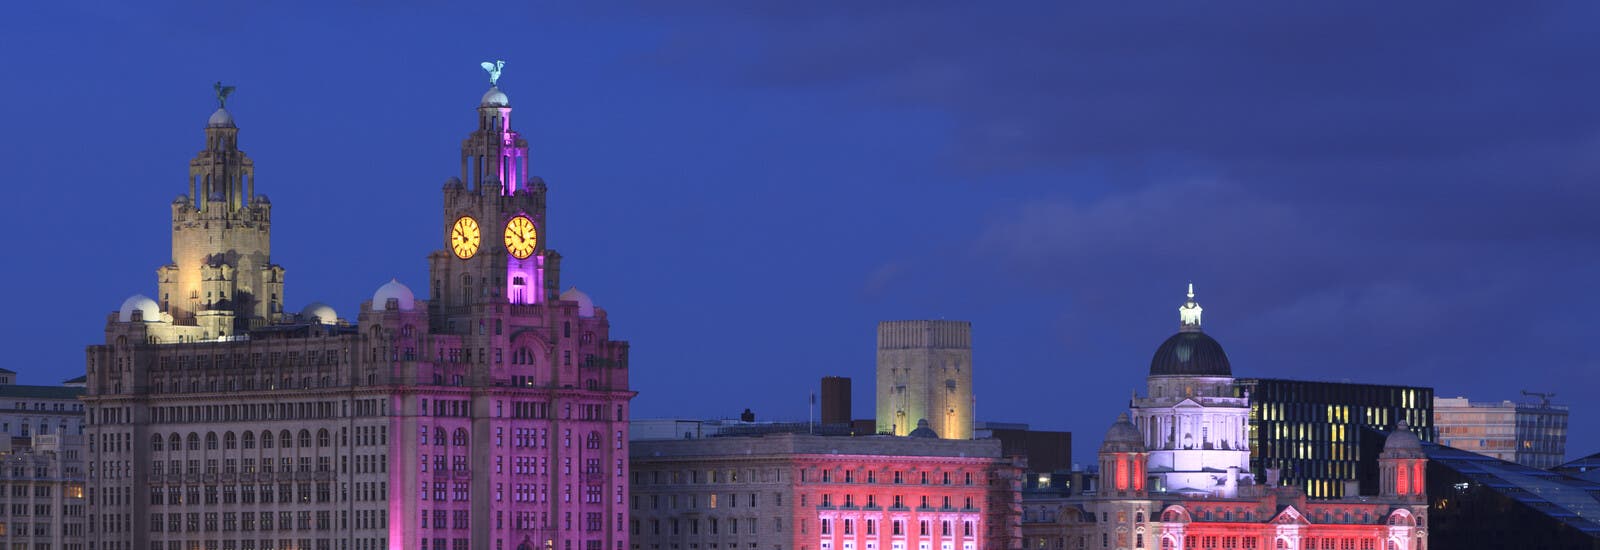 Liverpool's iconic skyline